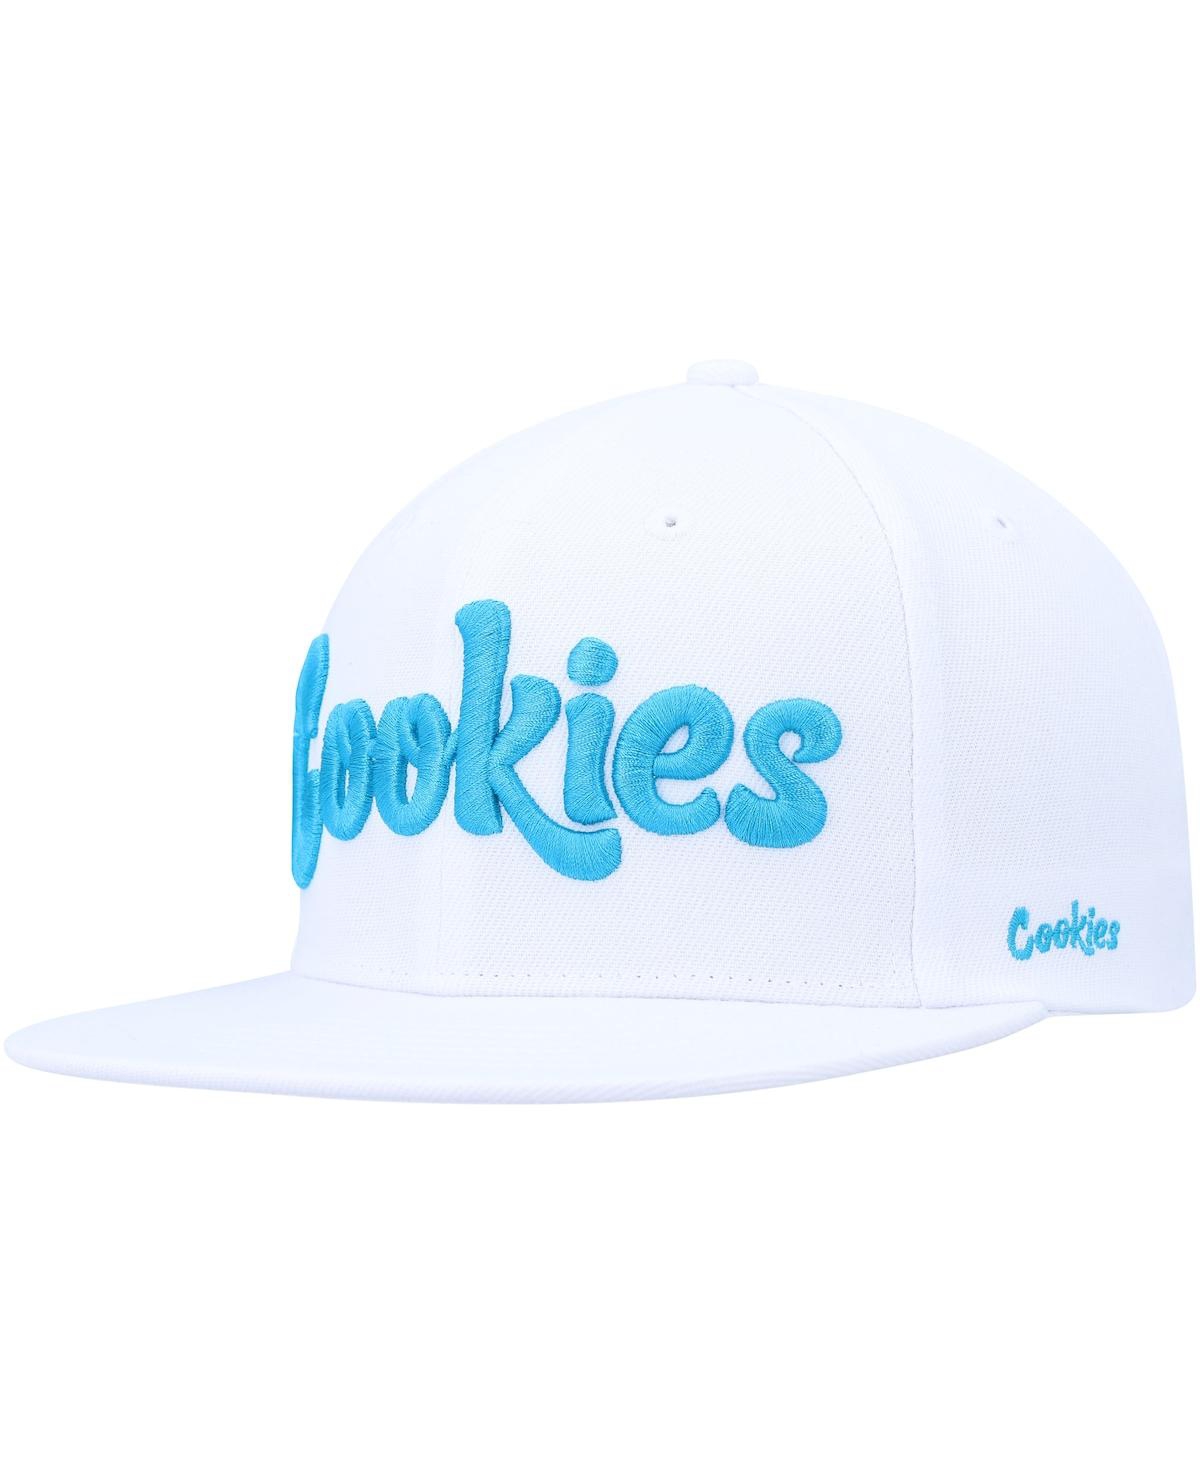 Cookies Clothing Men's White Original Logo Snapback Hat